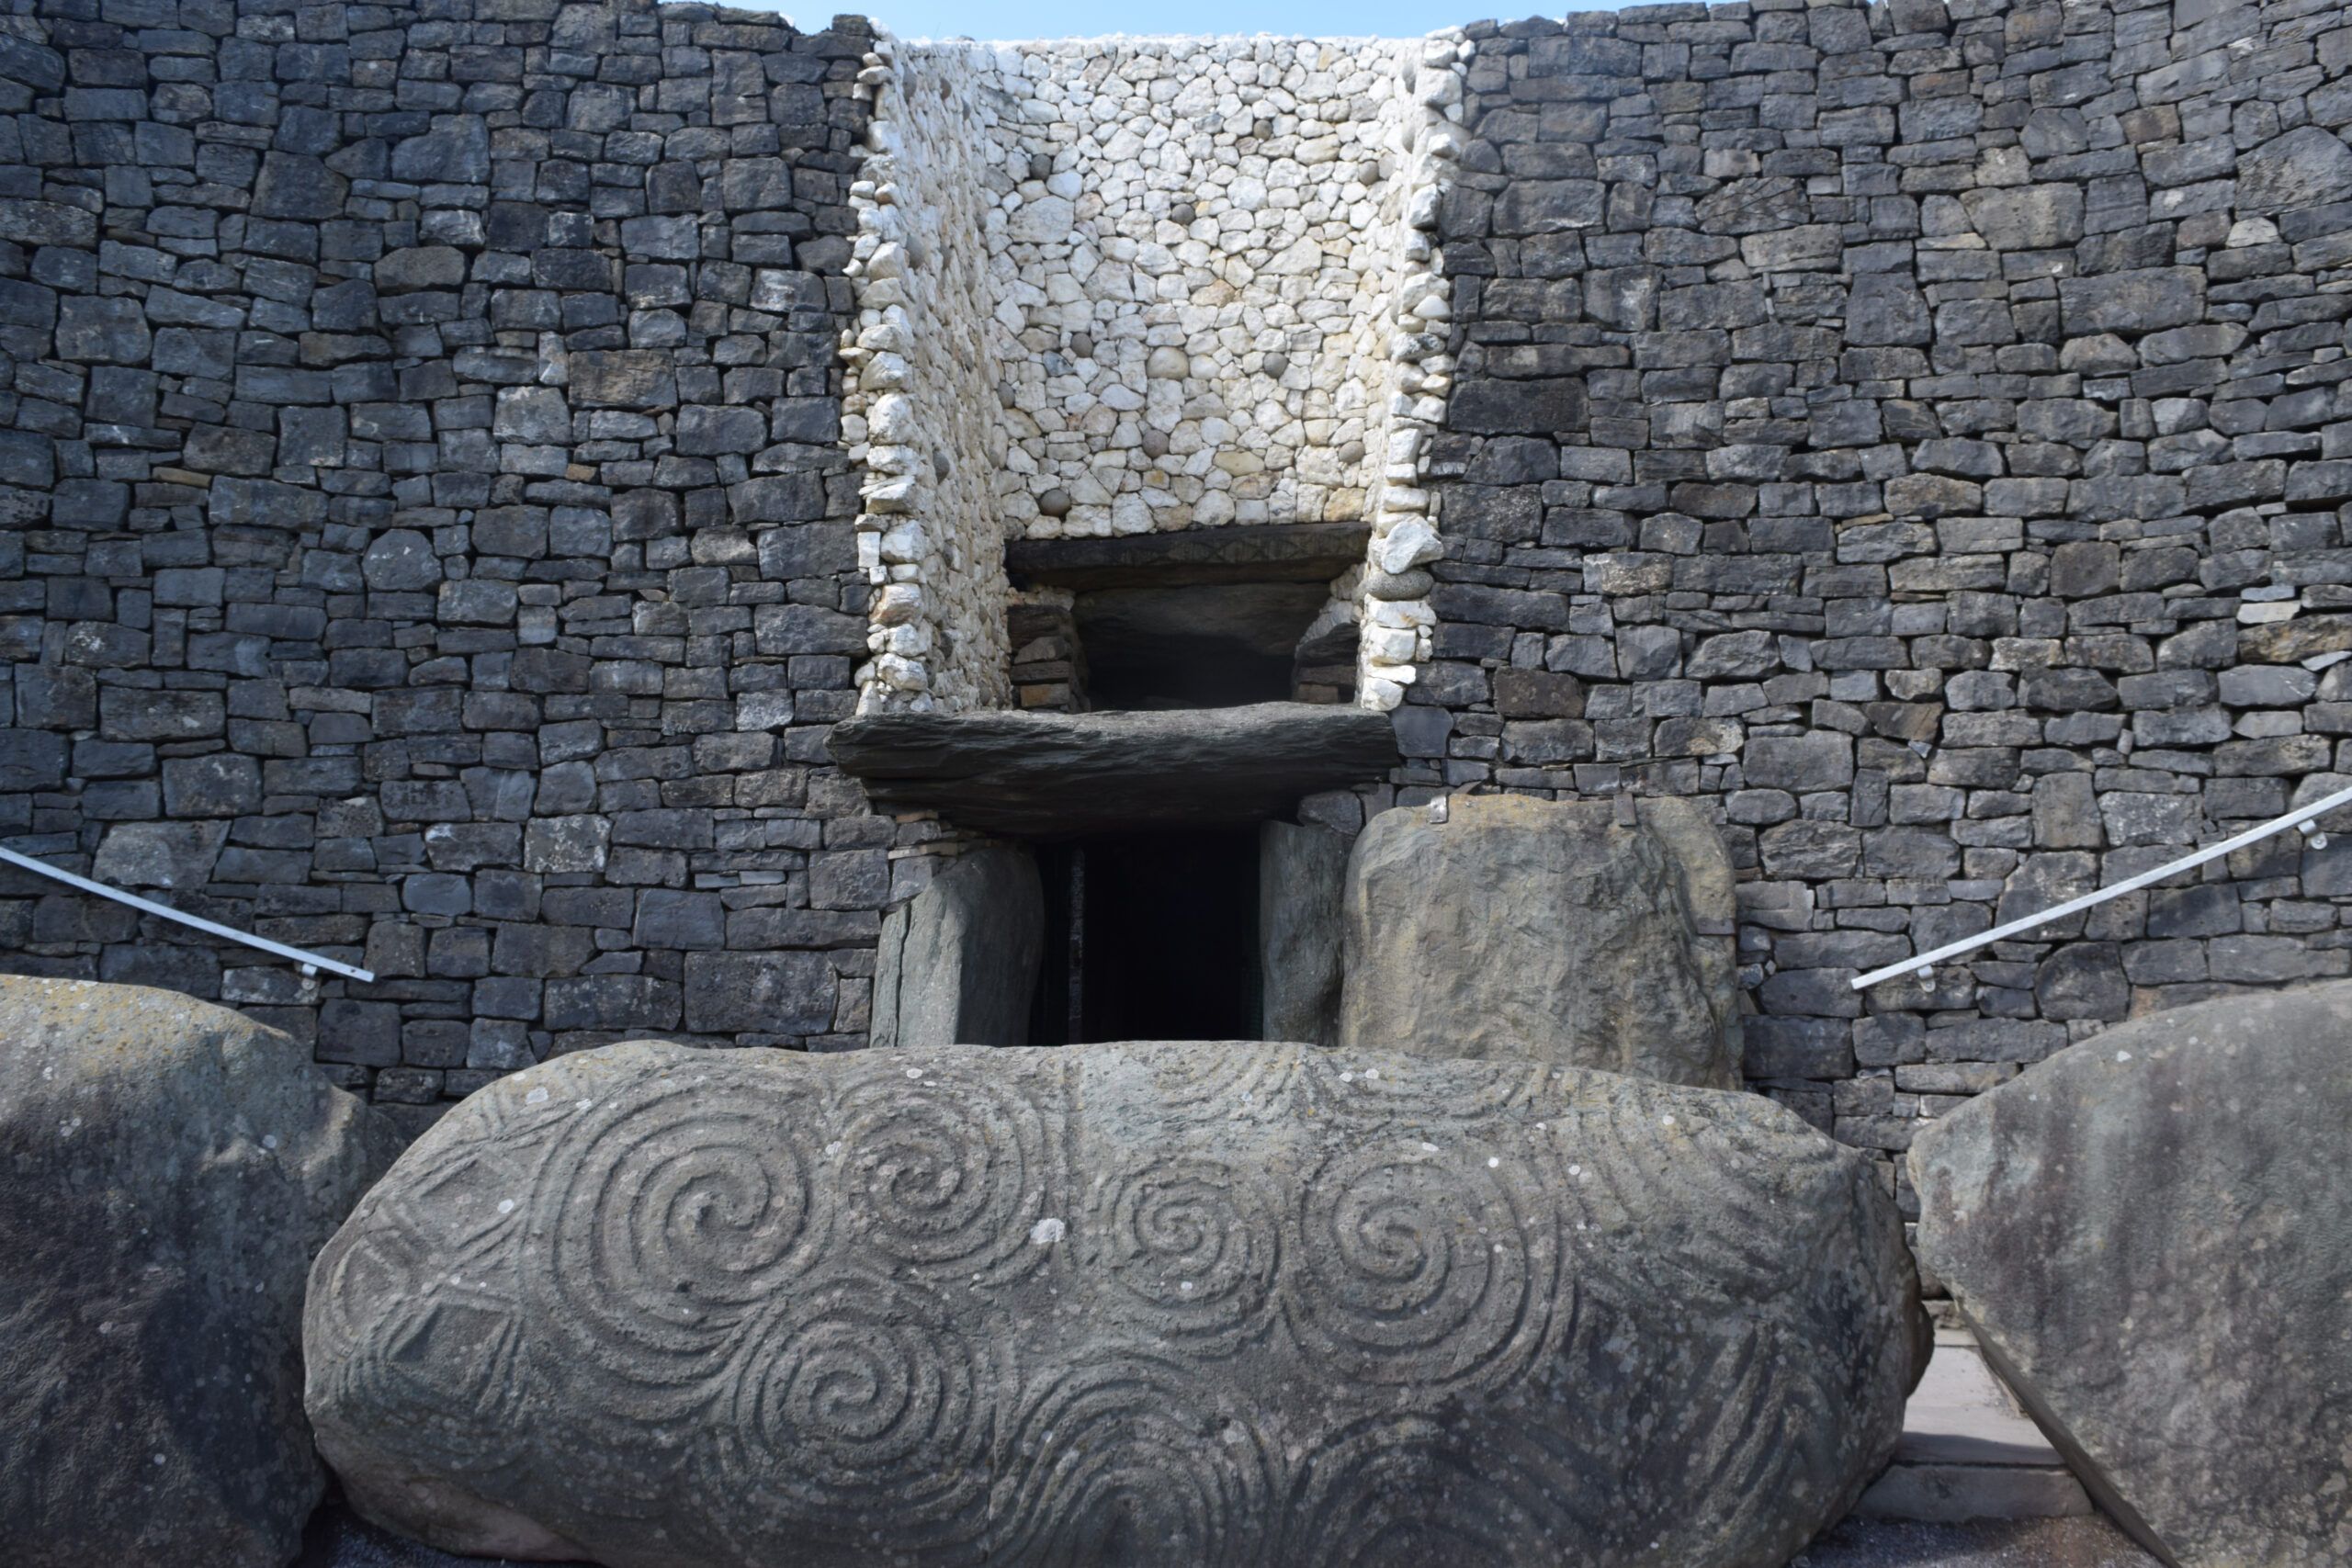 The entrance to Newgrange Tomb in Ireland